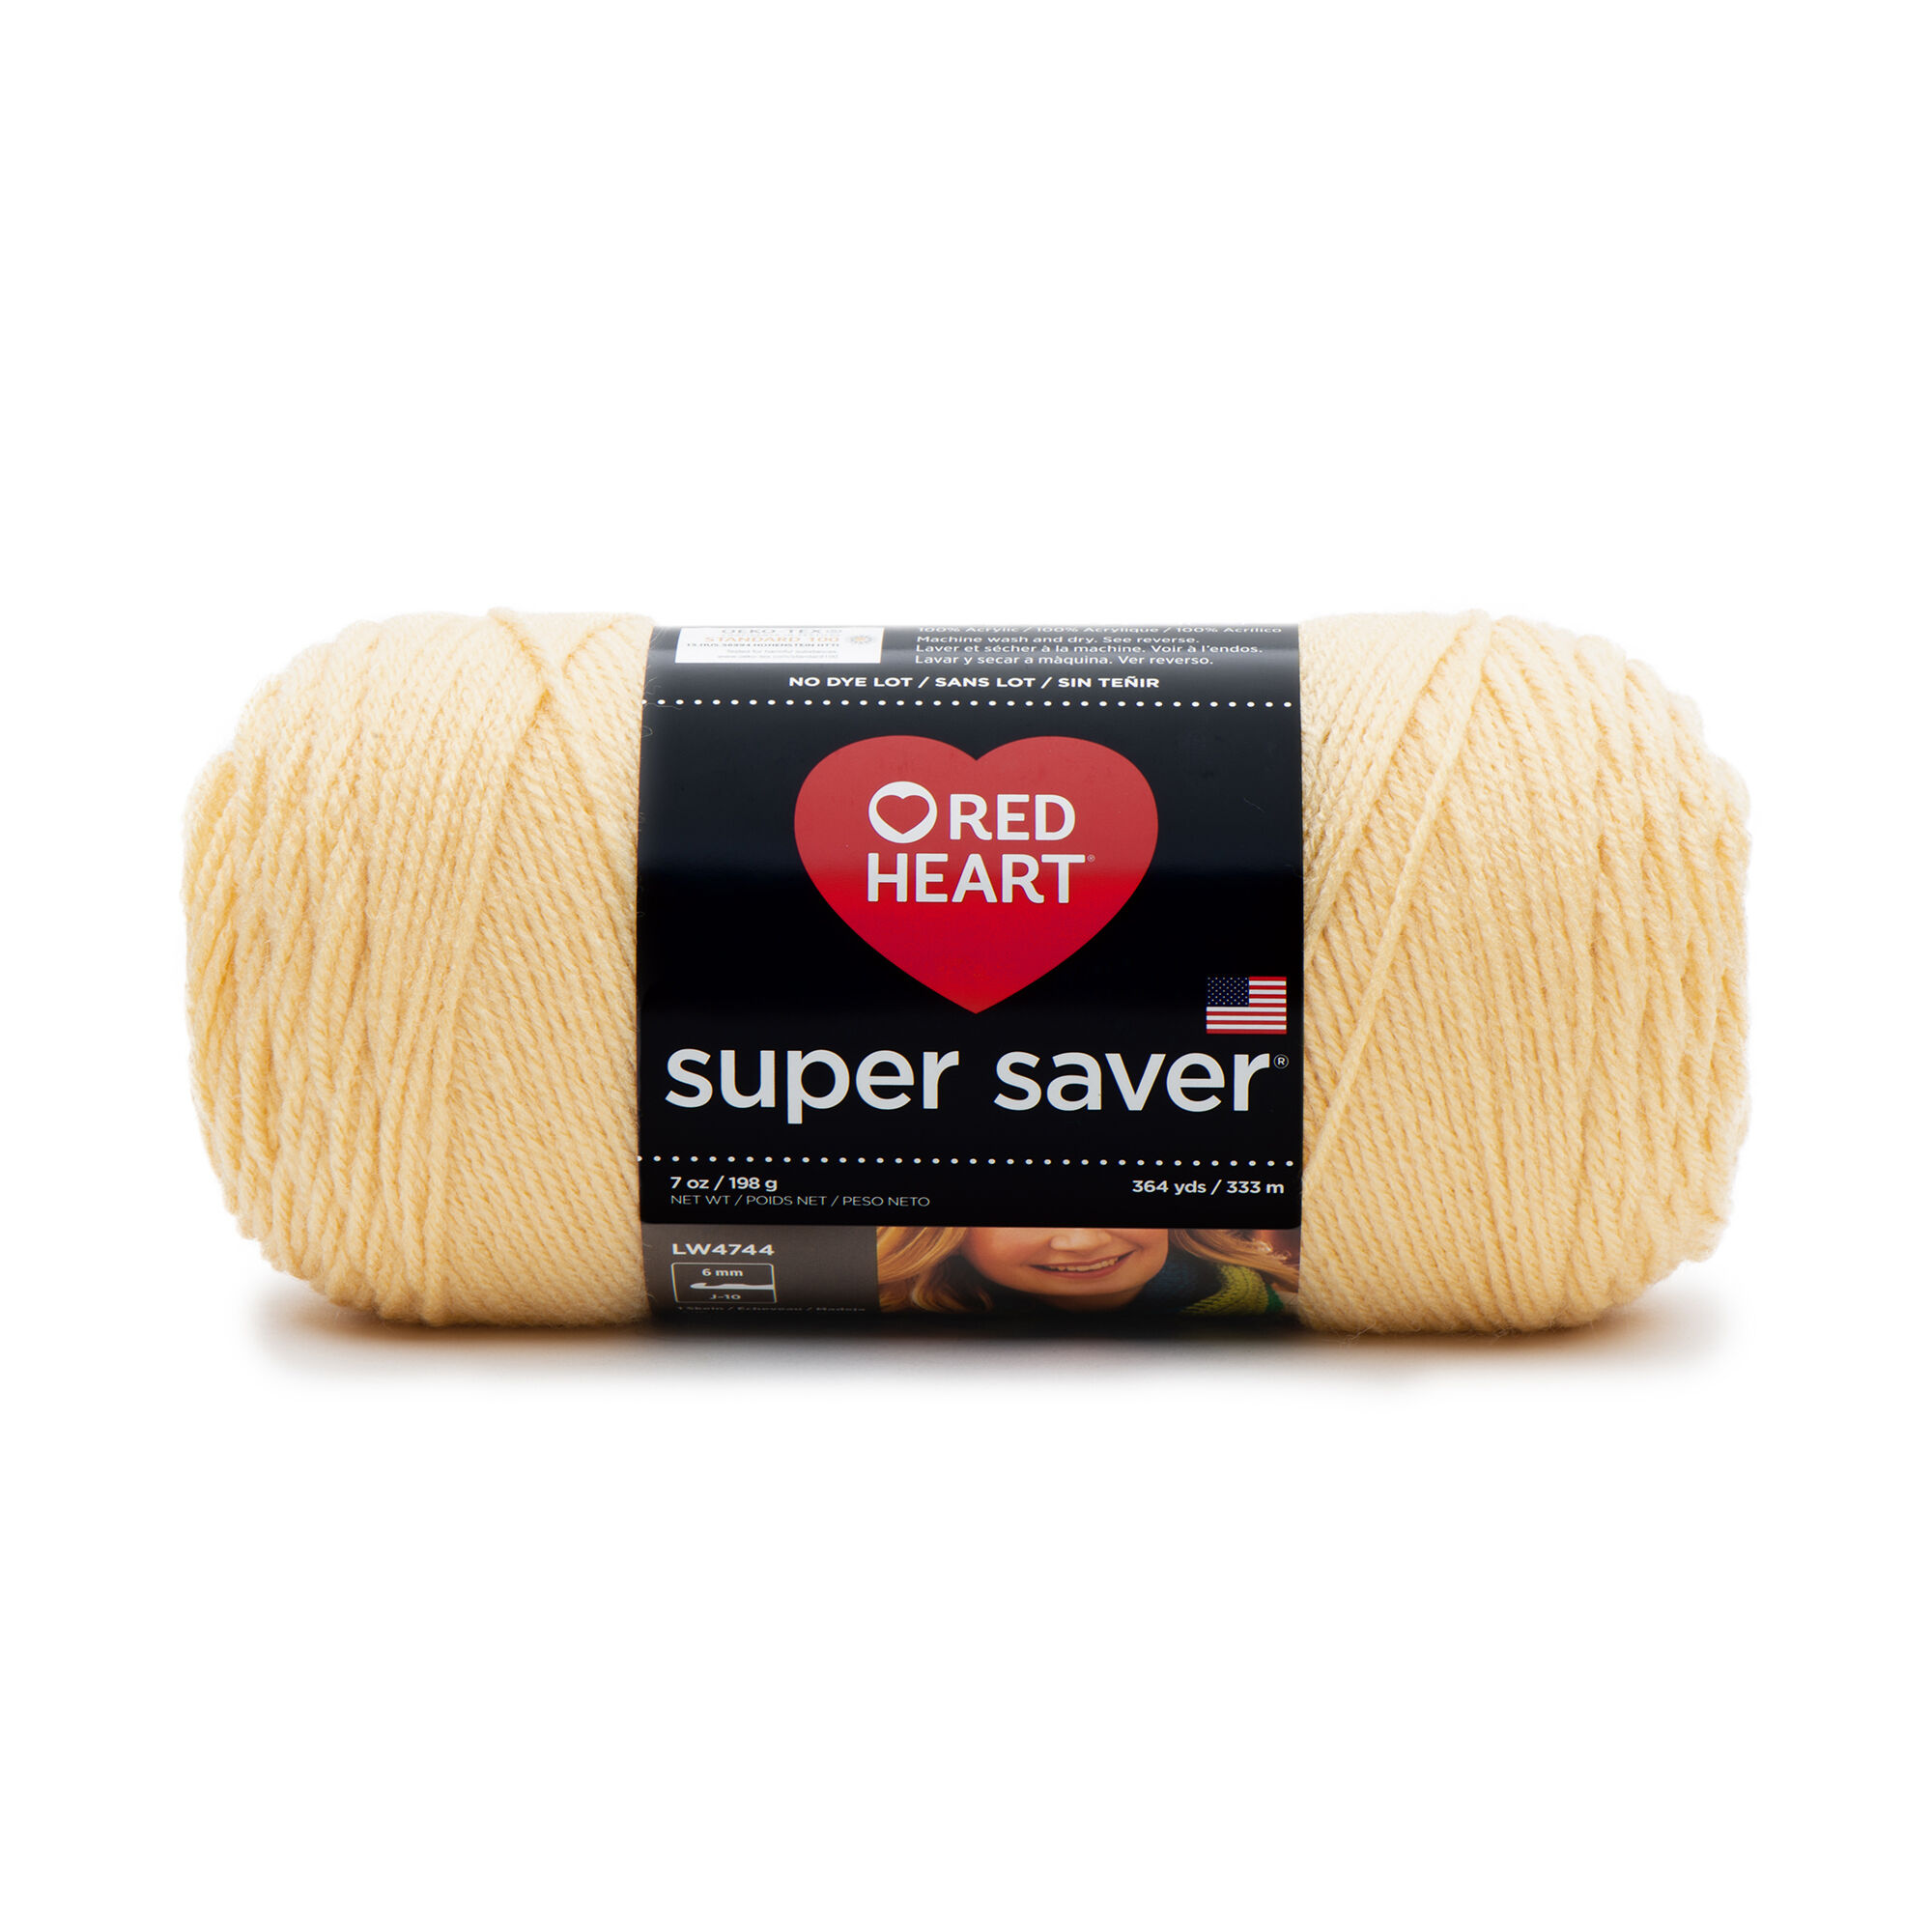 Red Heart Super Saver Size 4 Acrylic Cornmeal Yarn, 364 yd - image 1 of 18